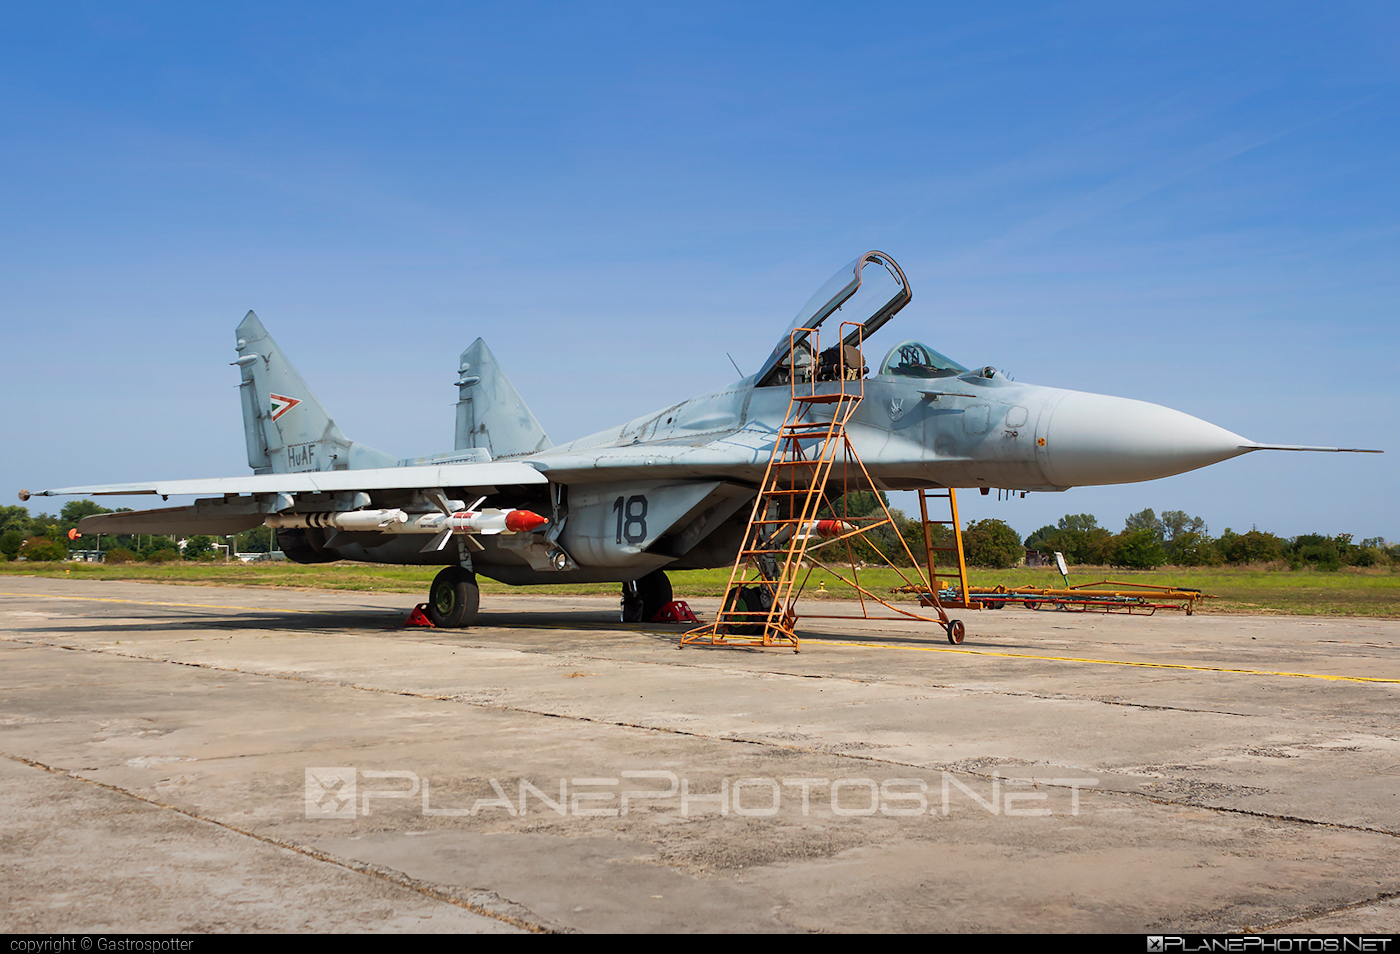 Mikoyan-Gurevich MiG-29B - 18 operated by Magyar Légierő (Hungarian Air Force) #hungarianairforce #magyarlegiero #mig #mig29 #mig29b #mikoyangurevich